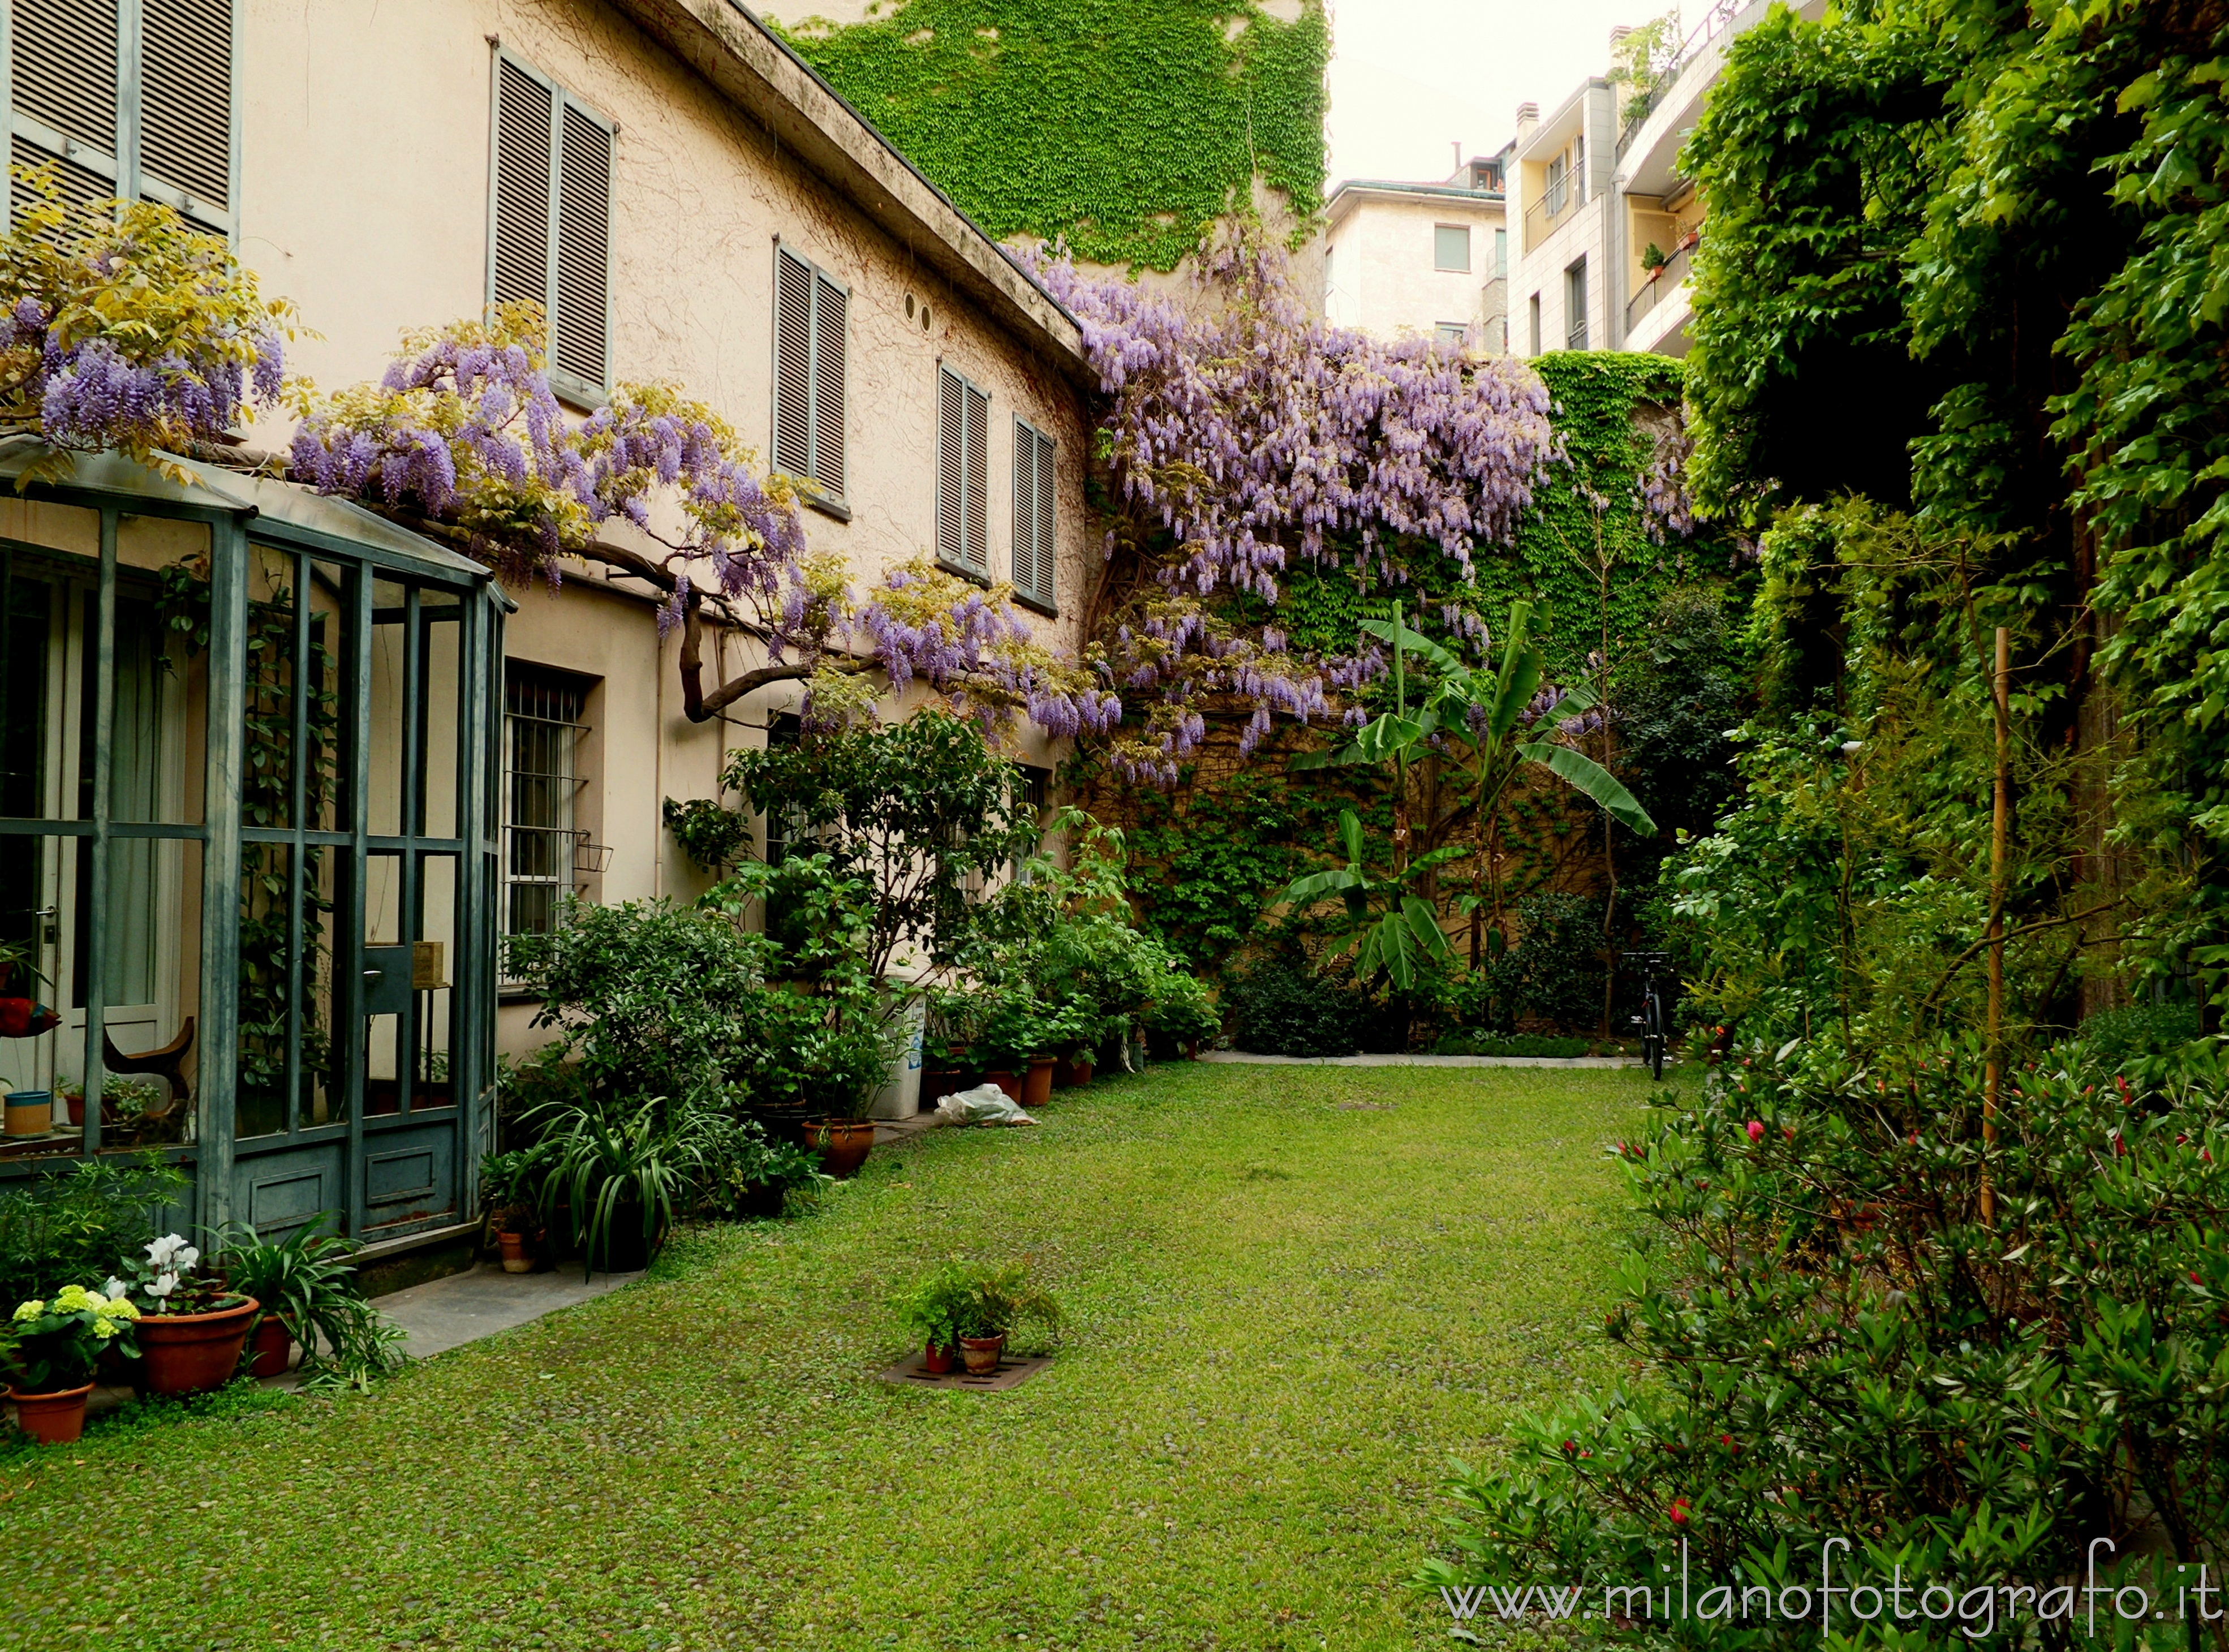 Milan (Italy): Courtyard with wisteria in bloom in Corso Garibaldi - Milan (Italy)